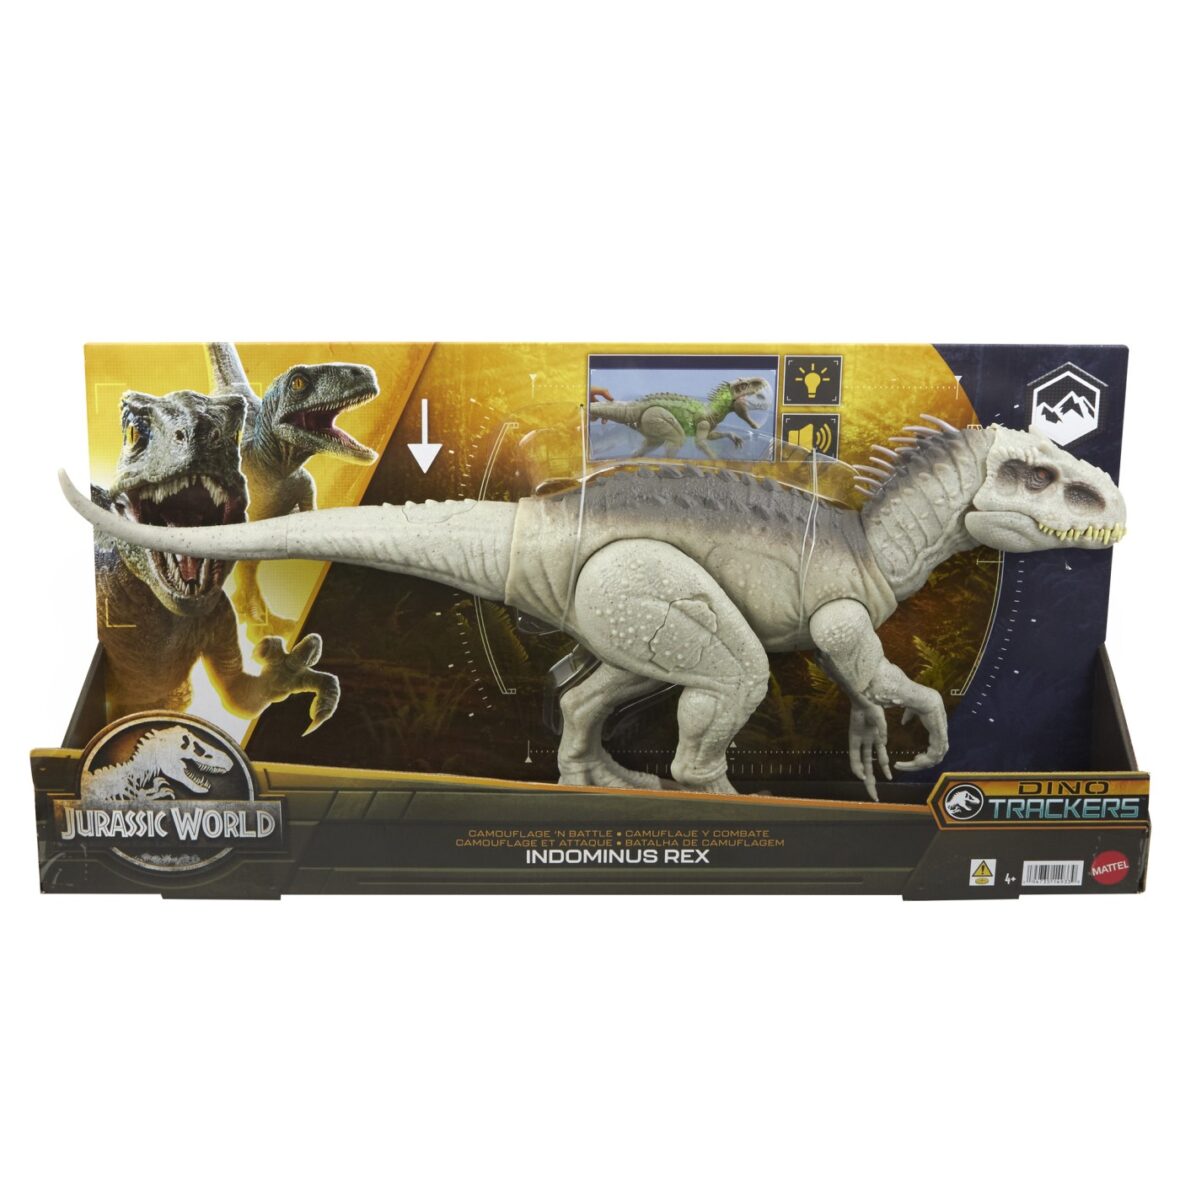 Jurassic World Dino Trackers Camouflage Battle Indominus Rex